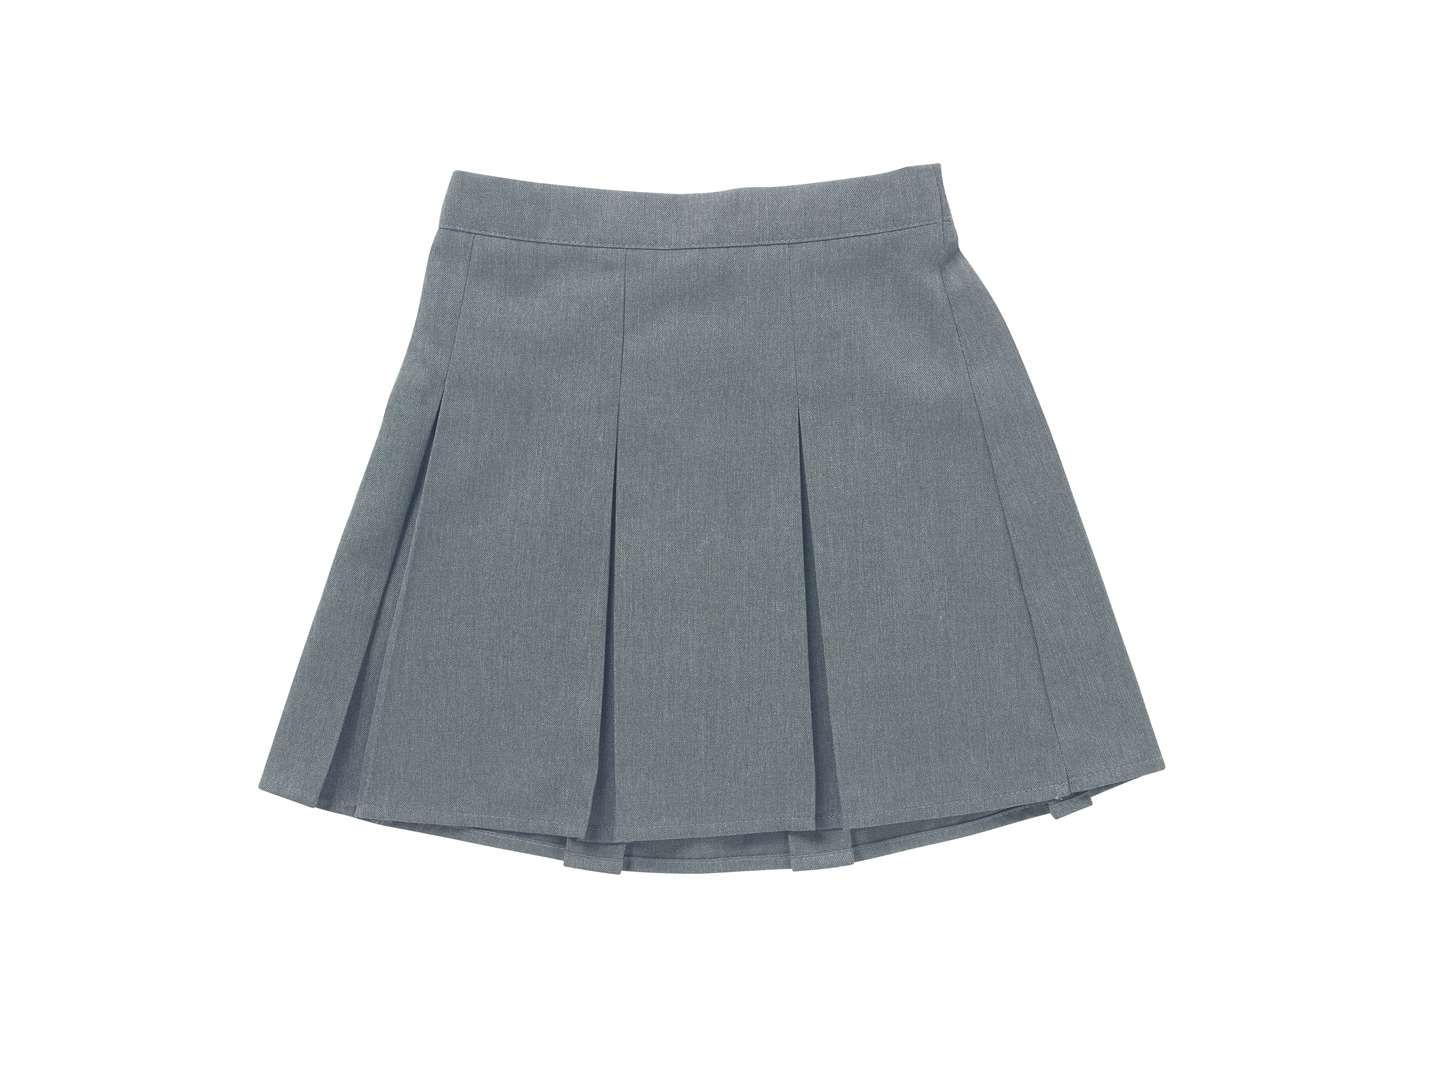 A Poundland/PEP&CO school skirt is £3